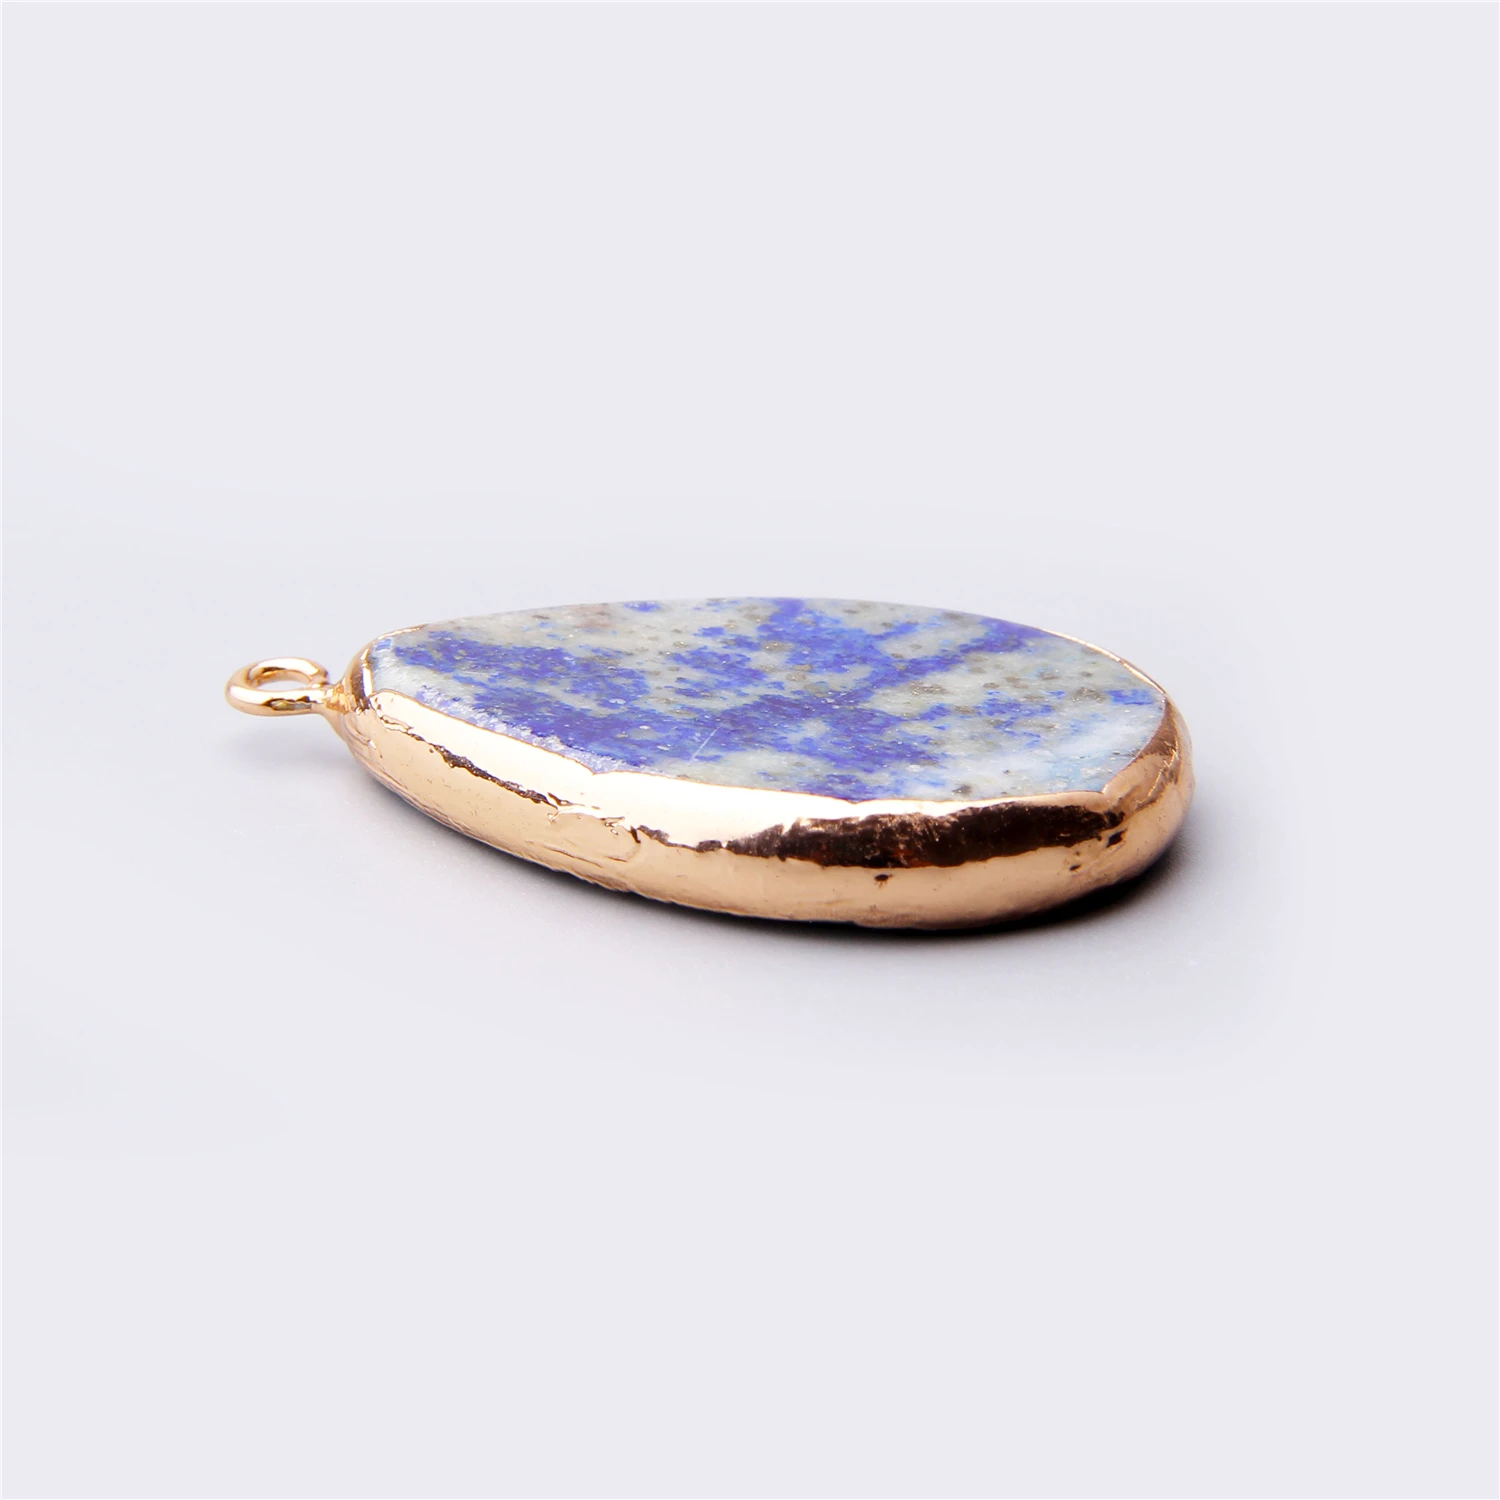 Wholesale pendulum Water Drop Shape Natural agates druzy Pendant DIY for Necklace Gold Color gems Pendant Charms Jewelry Making